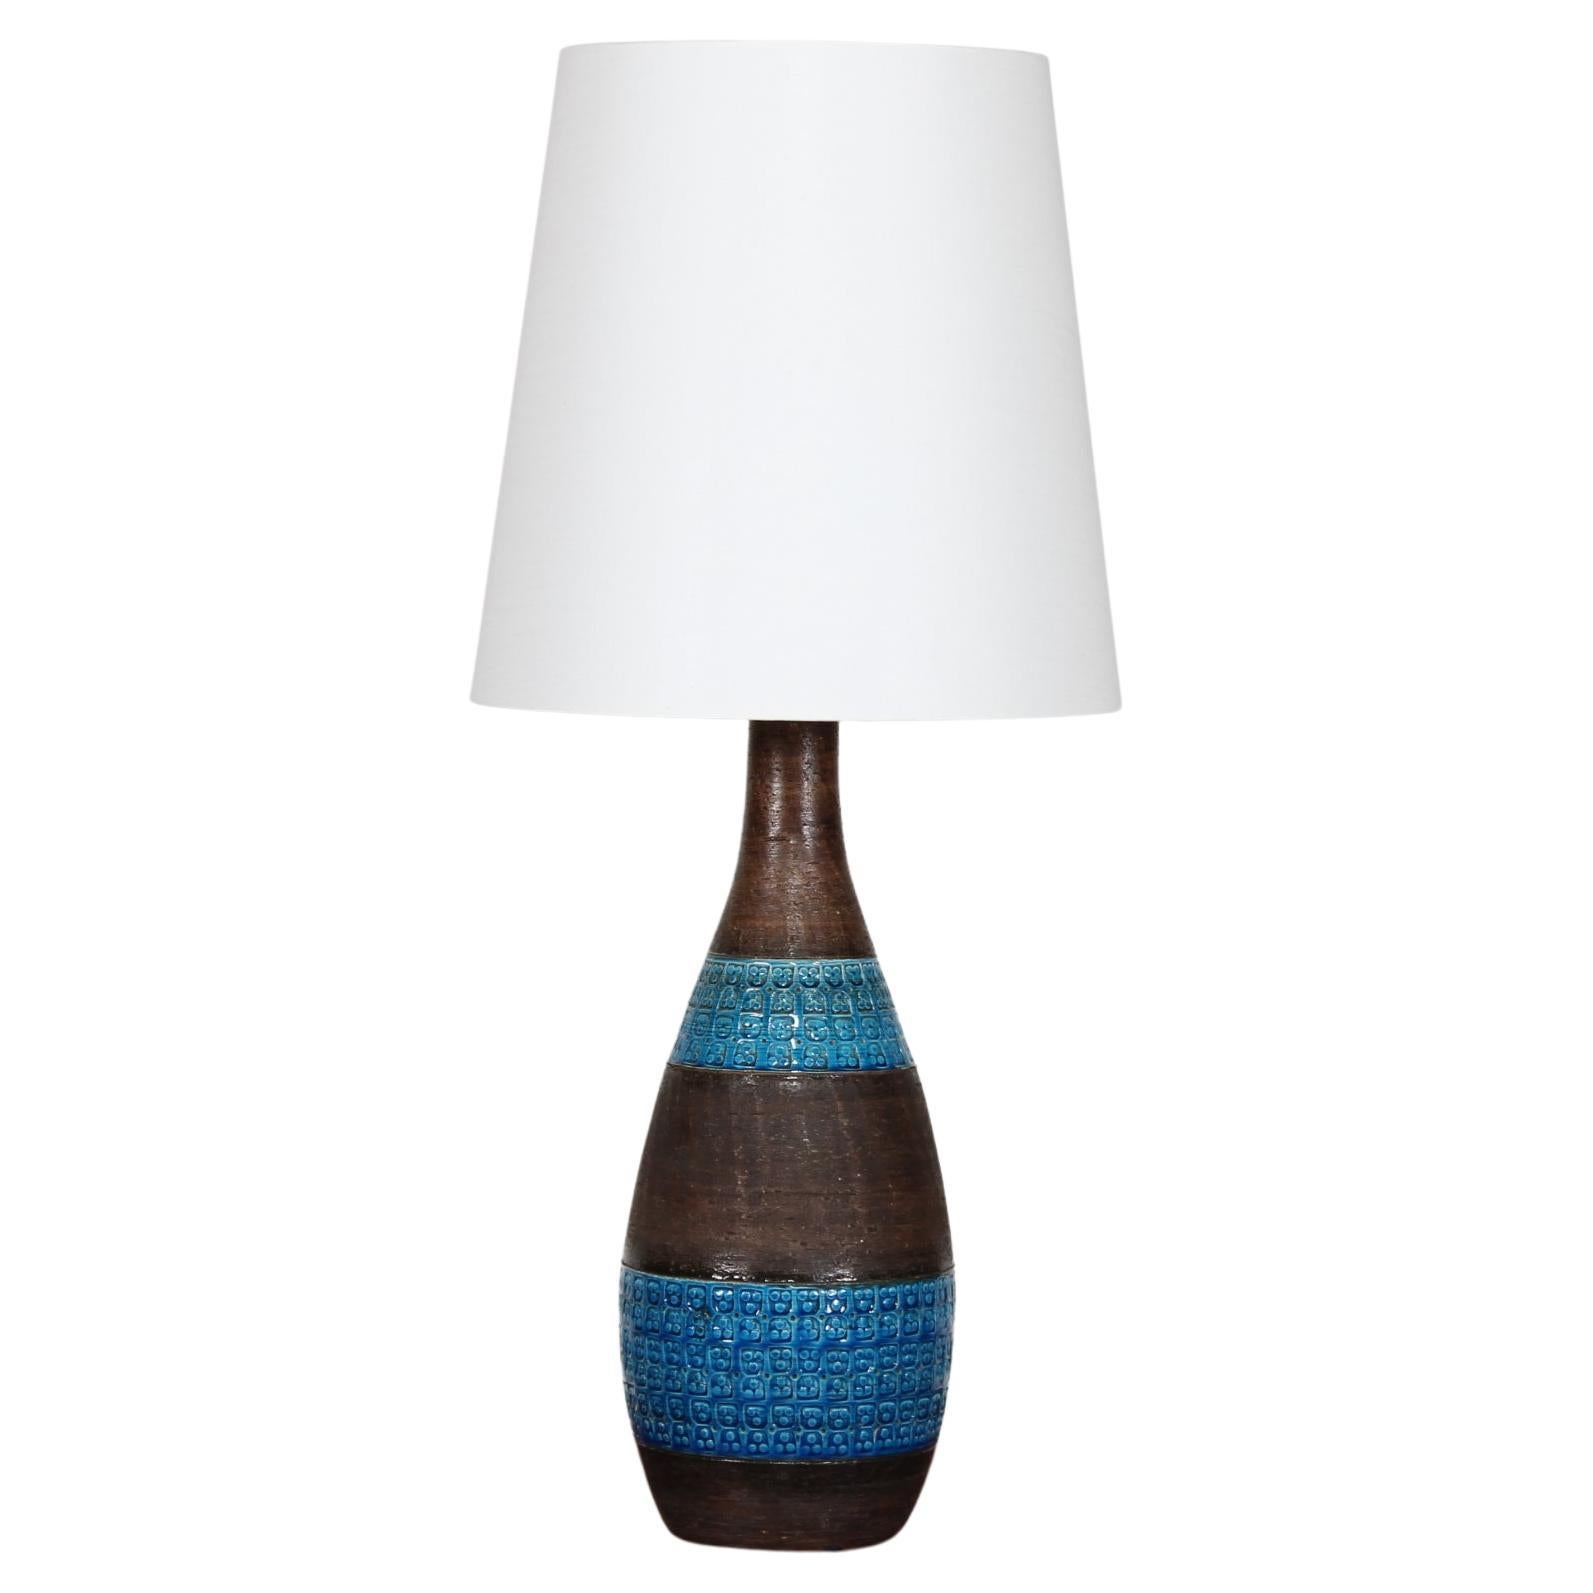 Huge Aldo Londi for Bitossi Table Lamp Blue and Brown Italian Ceramic, 1960s For Sale